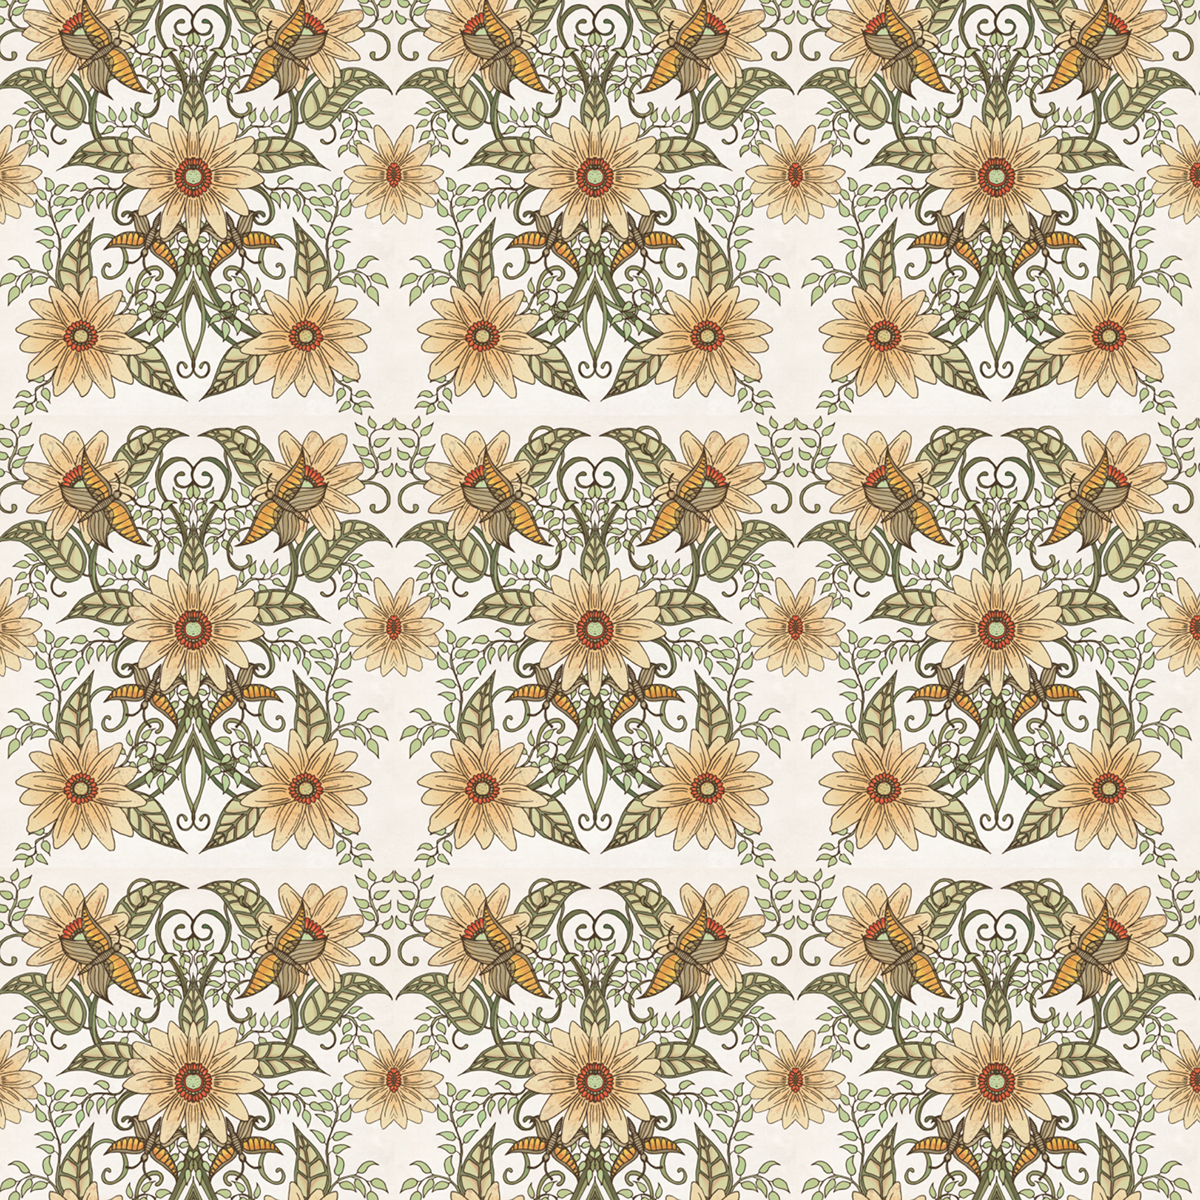 Nature Flowers Flora Patterns deisgn textile Illustrator photoshop